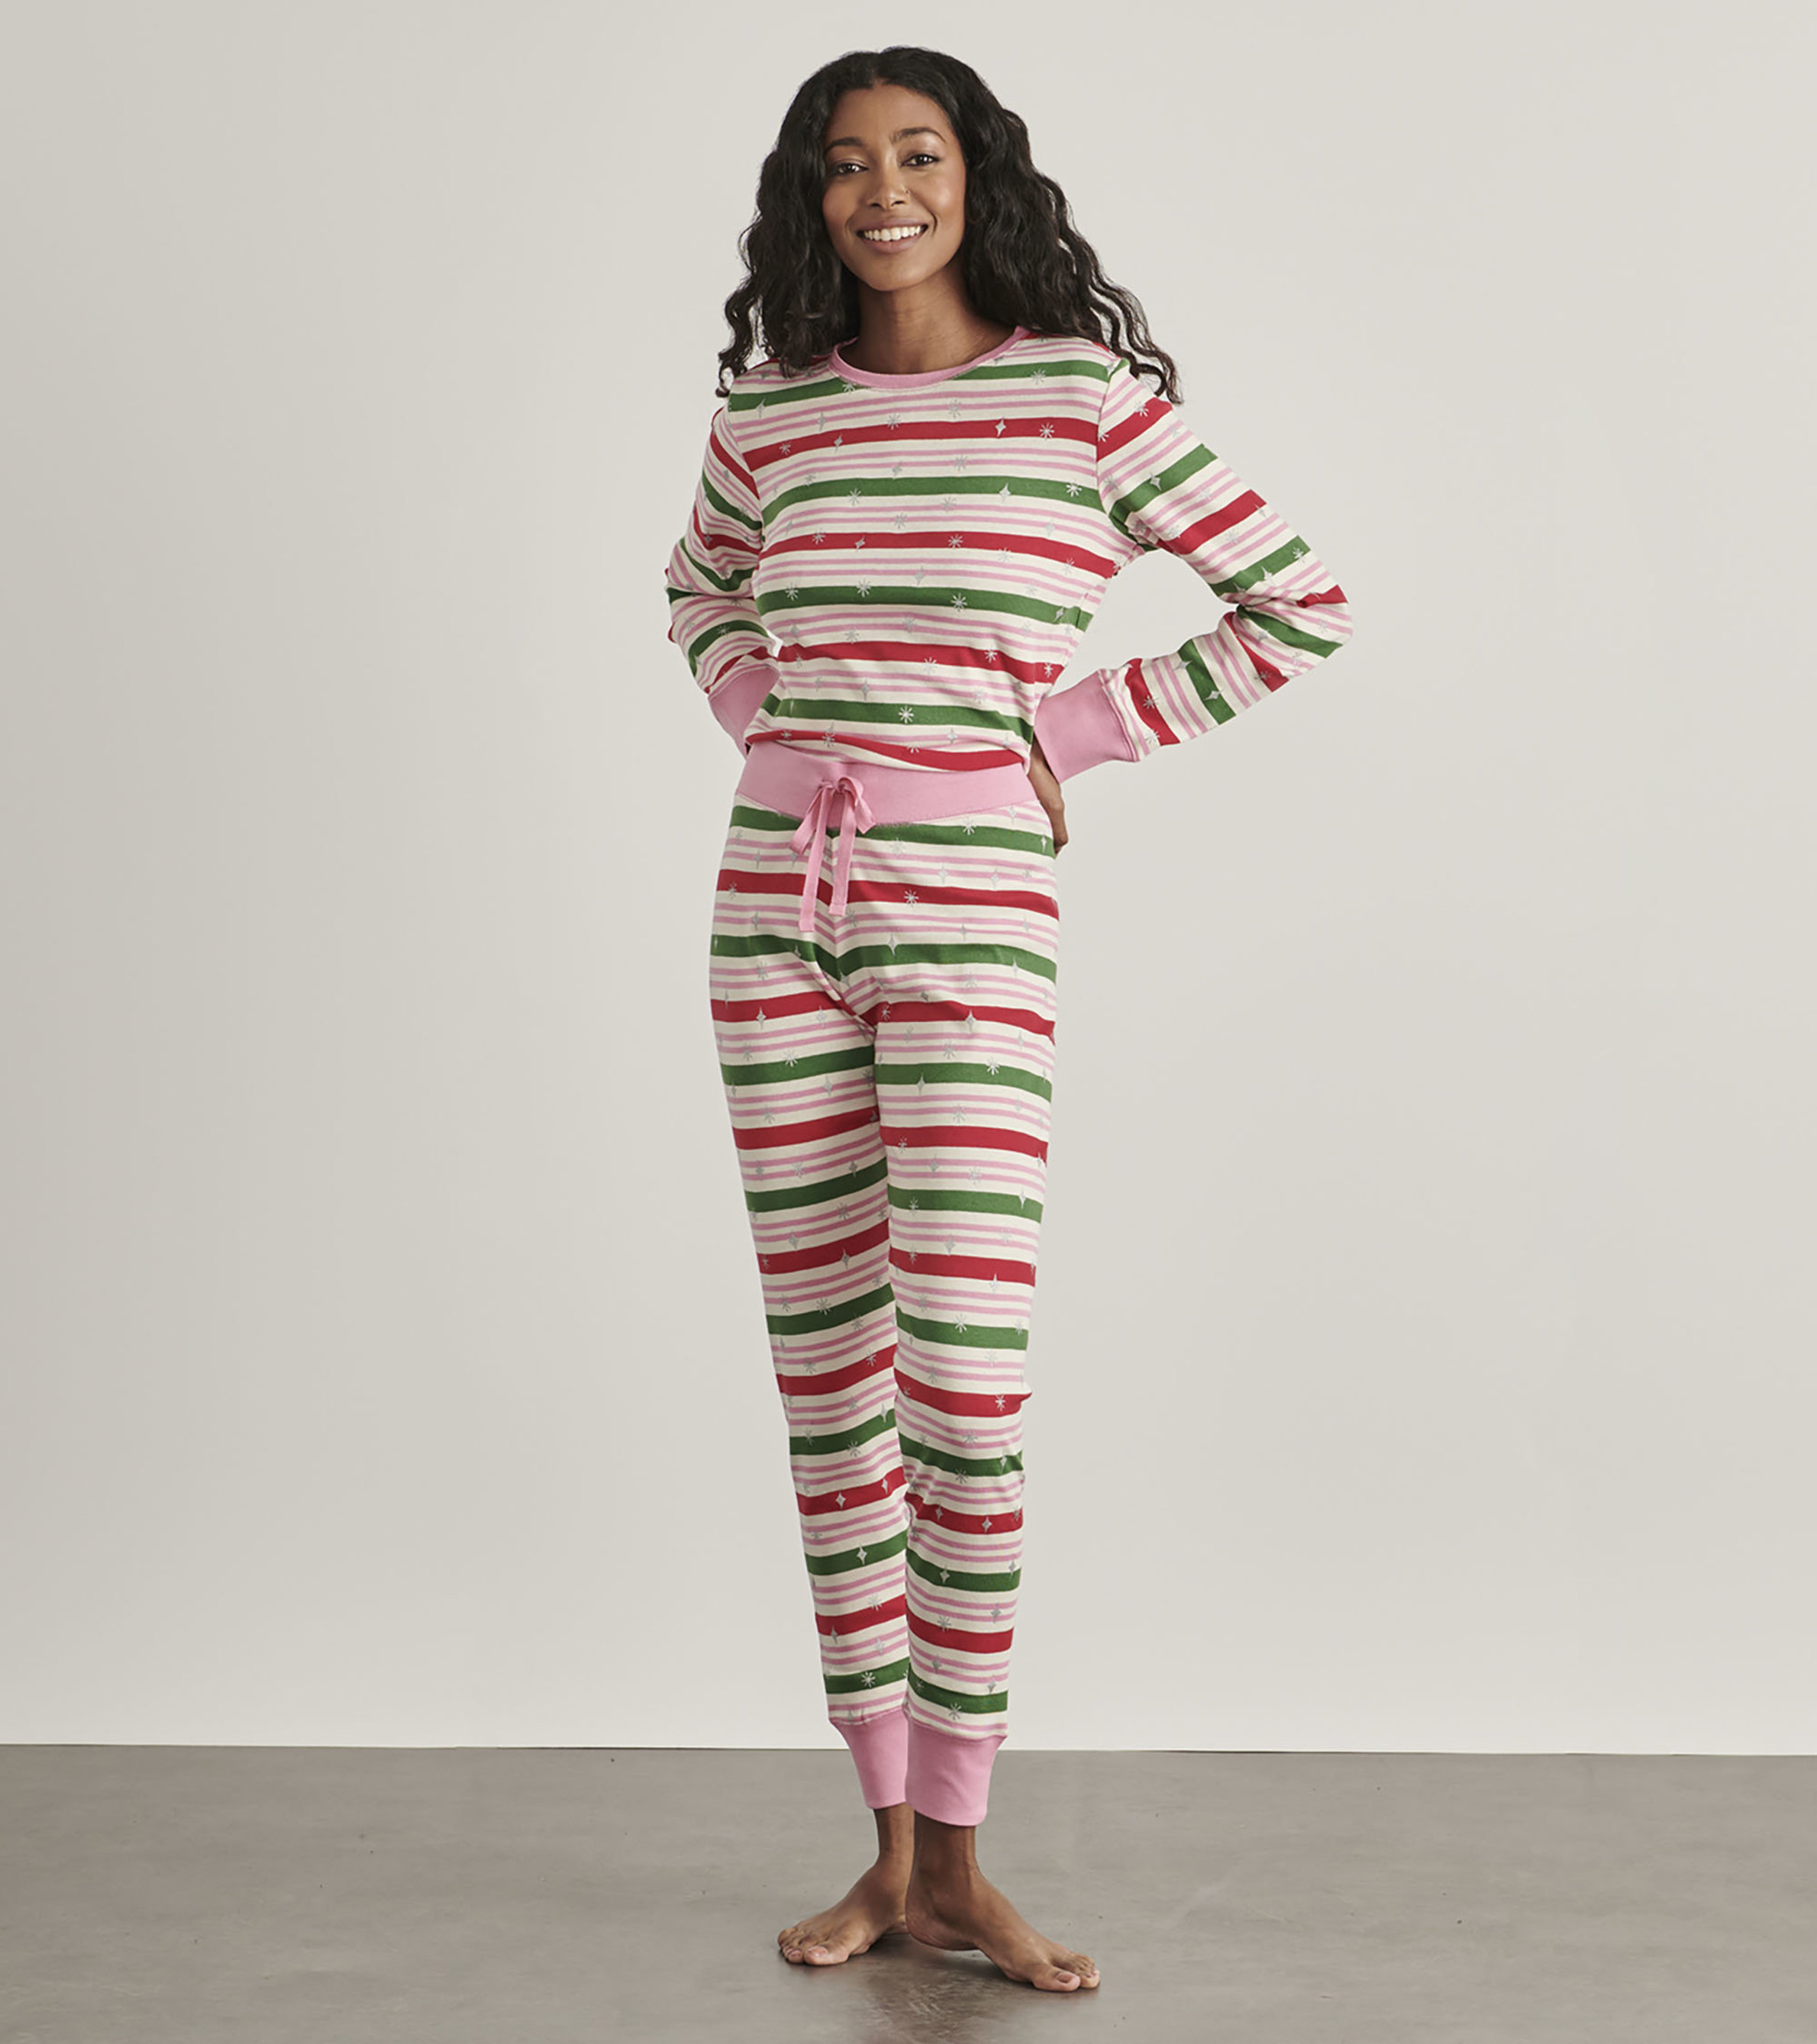 Candy Stripes Women's Pajama Set - Hatley US